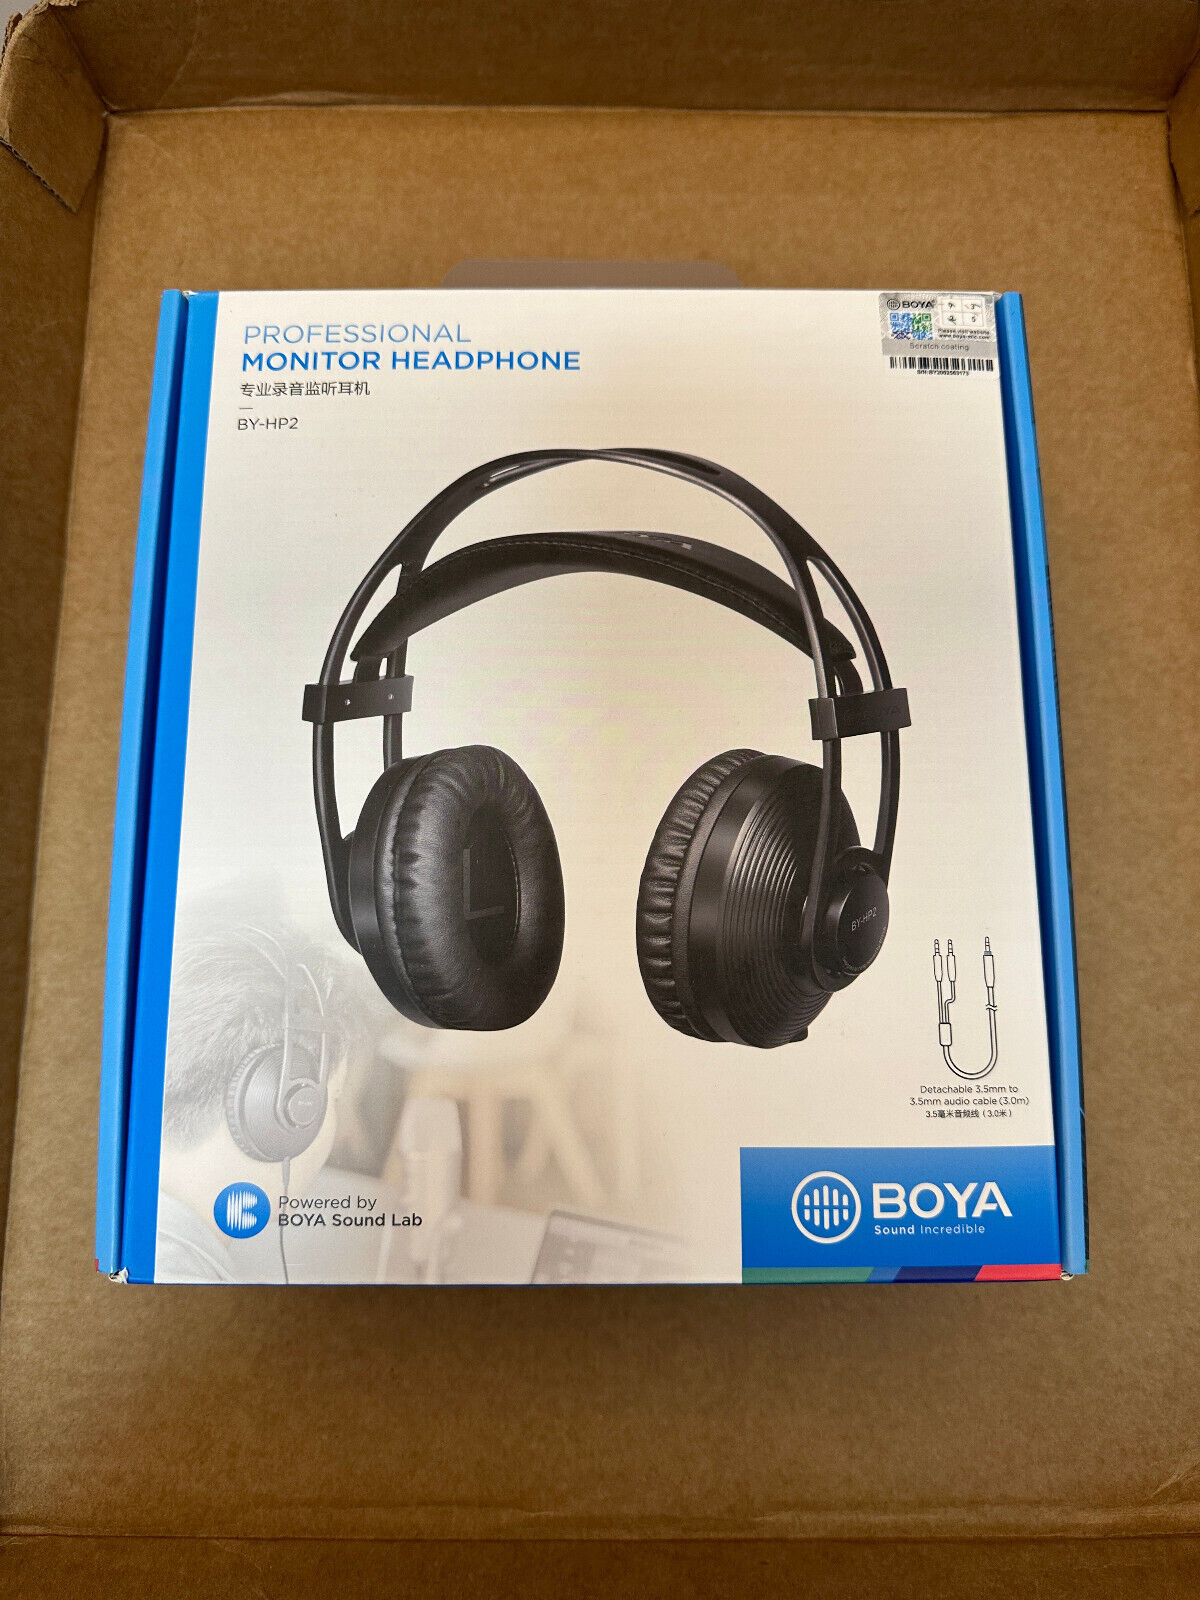 *New* Boya BY-HP2 Professional Monitor Headphone